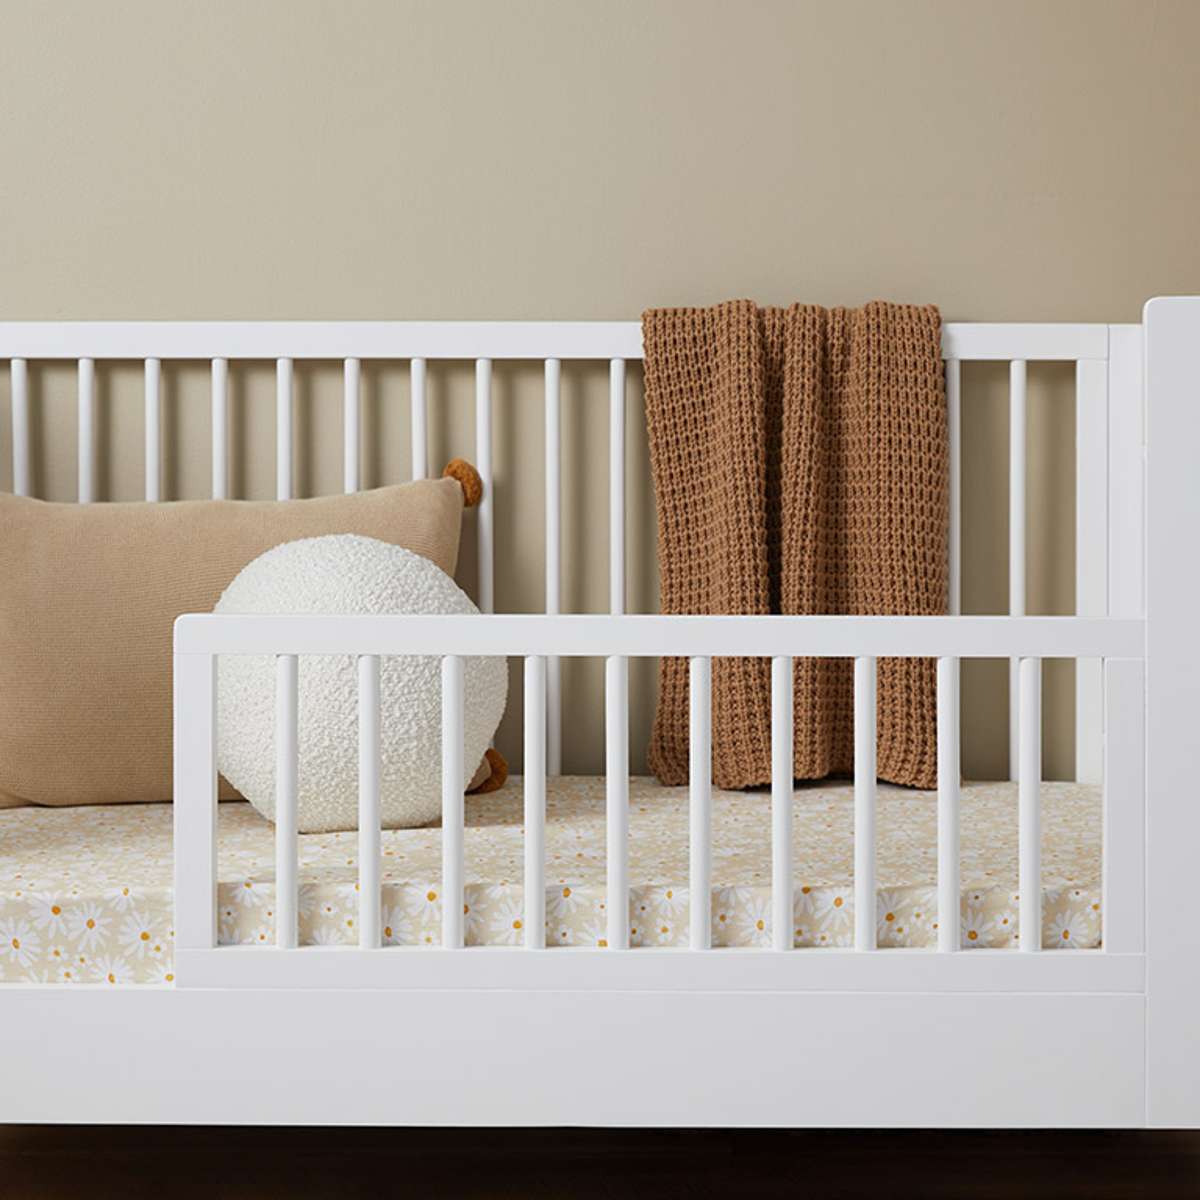 Maisie Octavia Cot Toddler Bed Half Frame - White - Mocka Australia